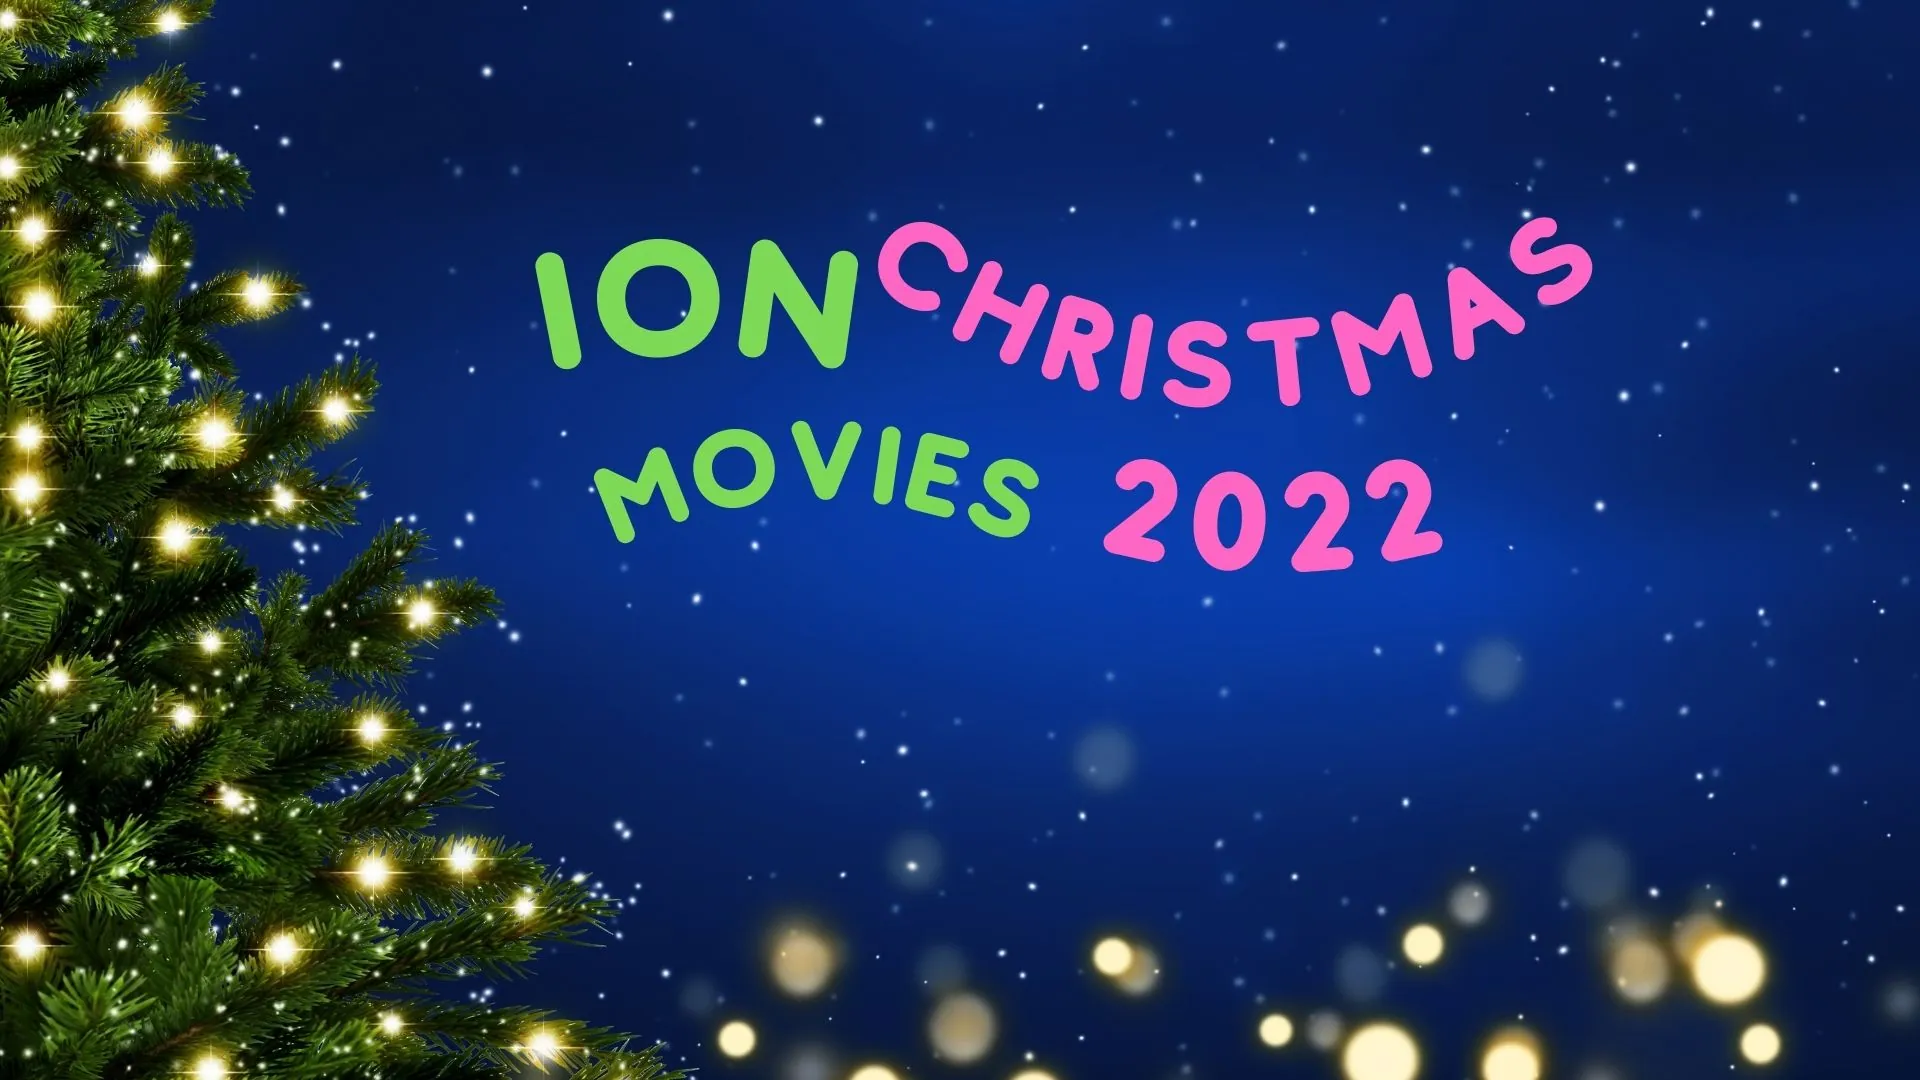 ION Christmas Movies 2022 List